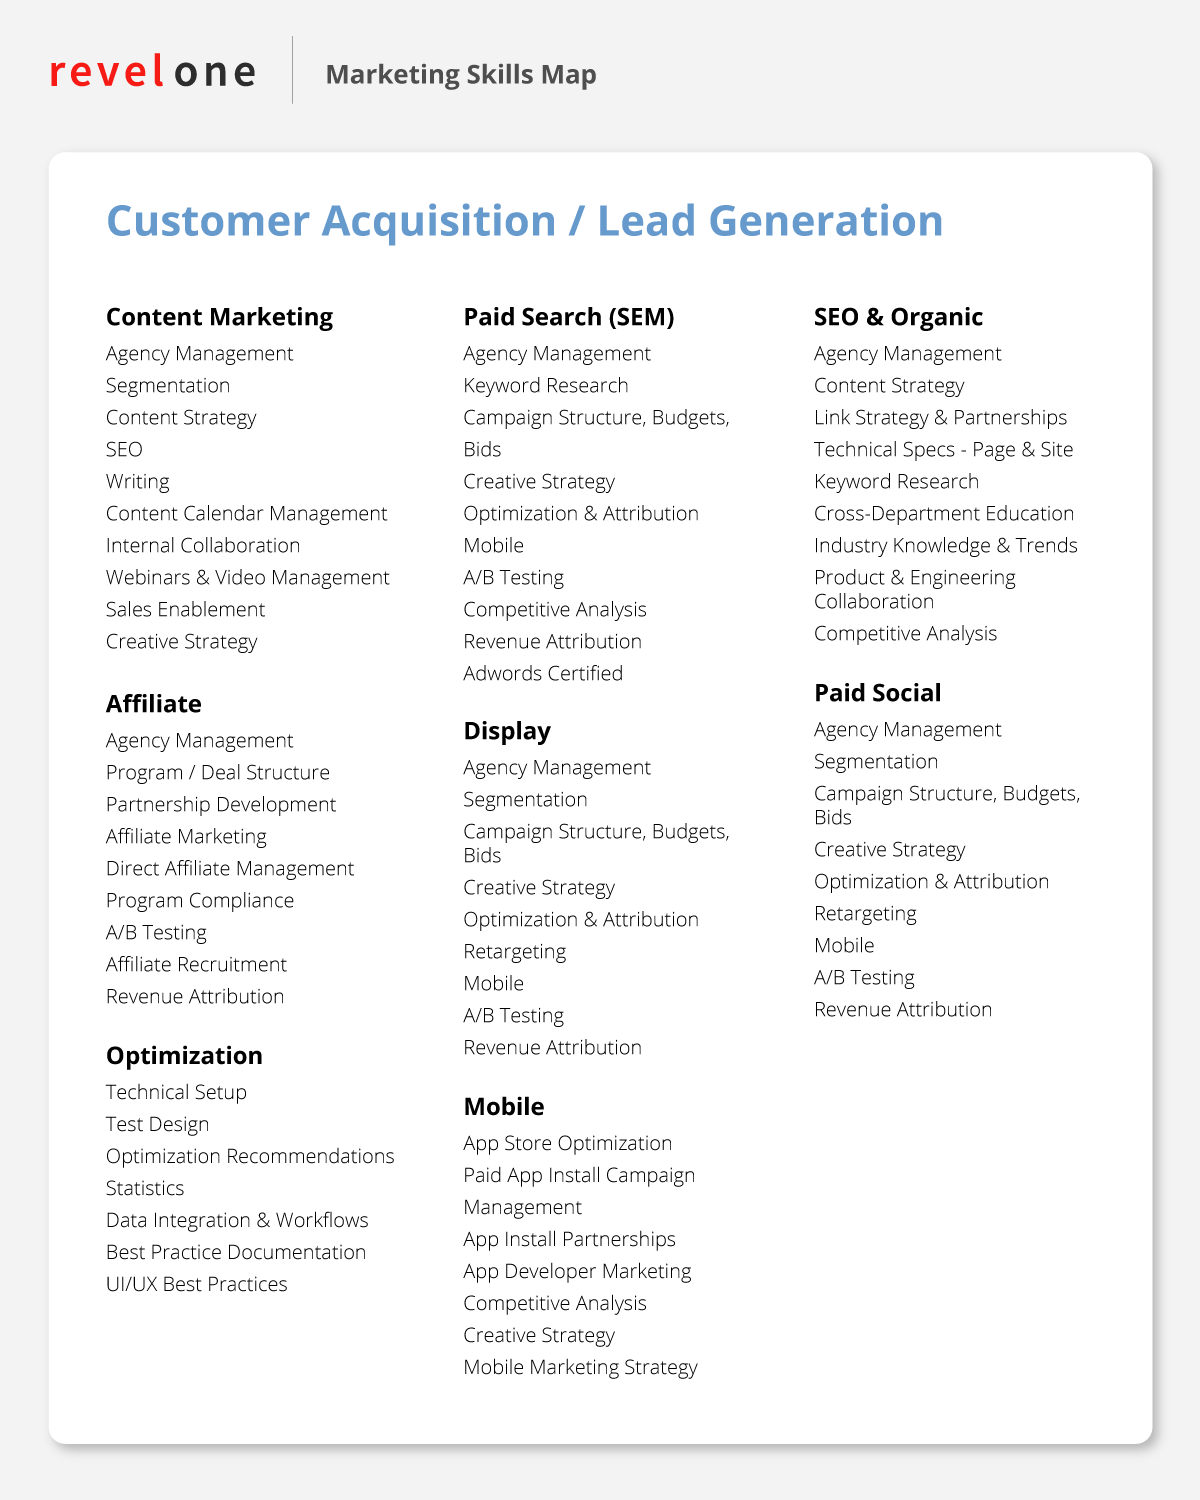 RevelOne Marketing Skills Map - Acquisition / Lead Generation 